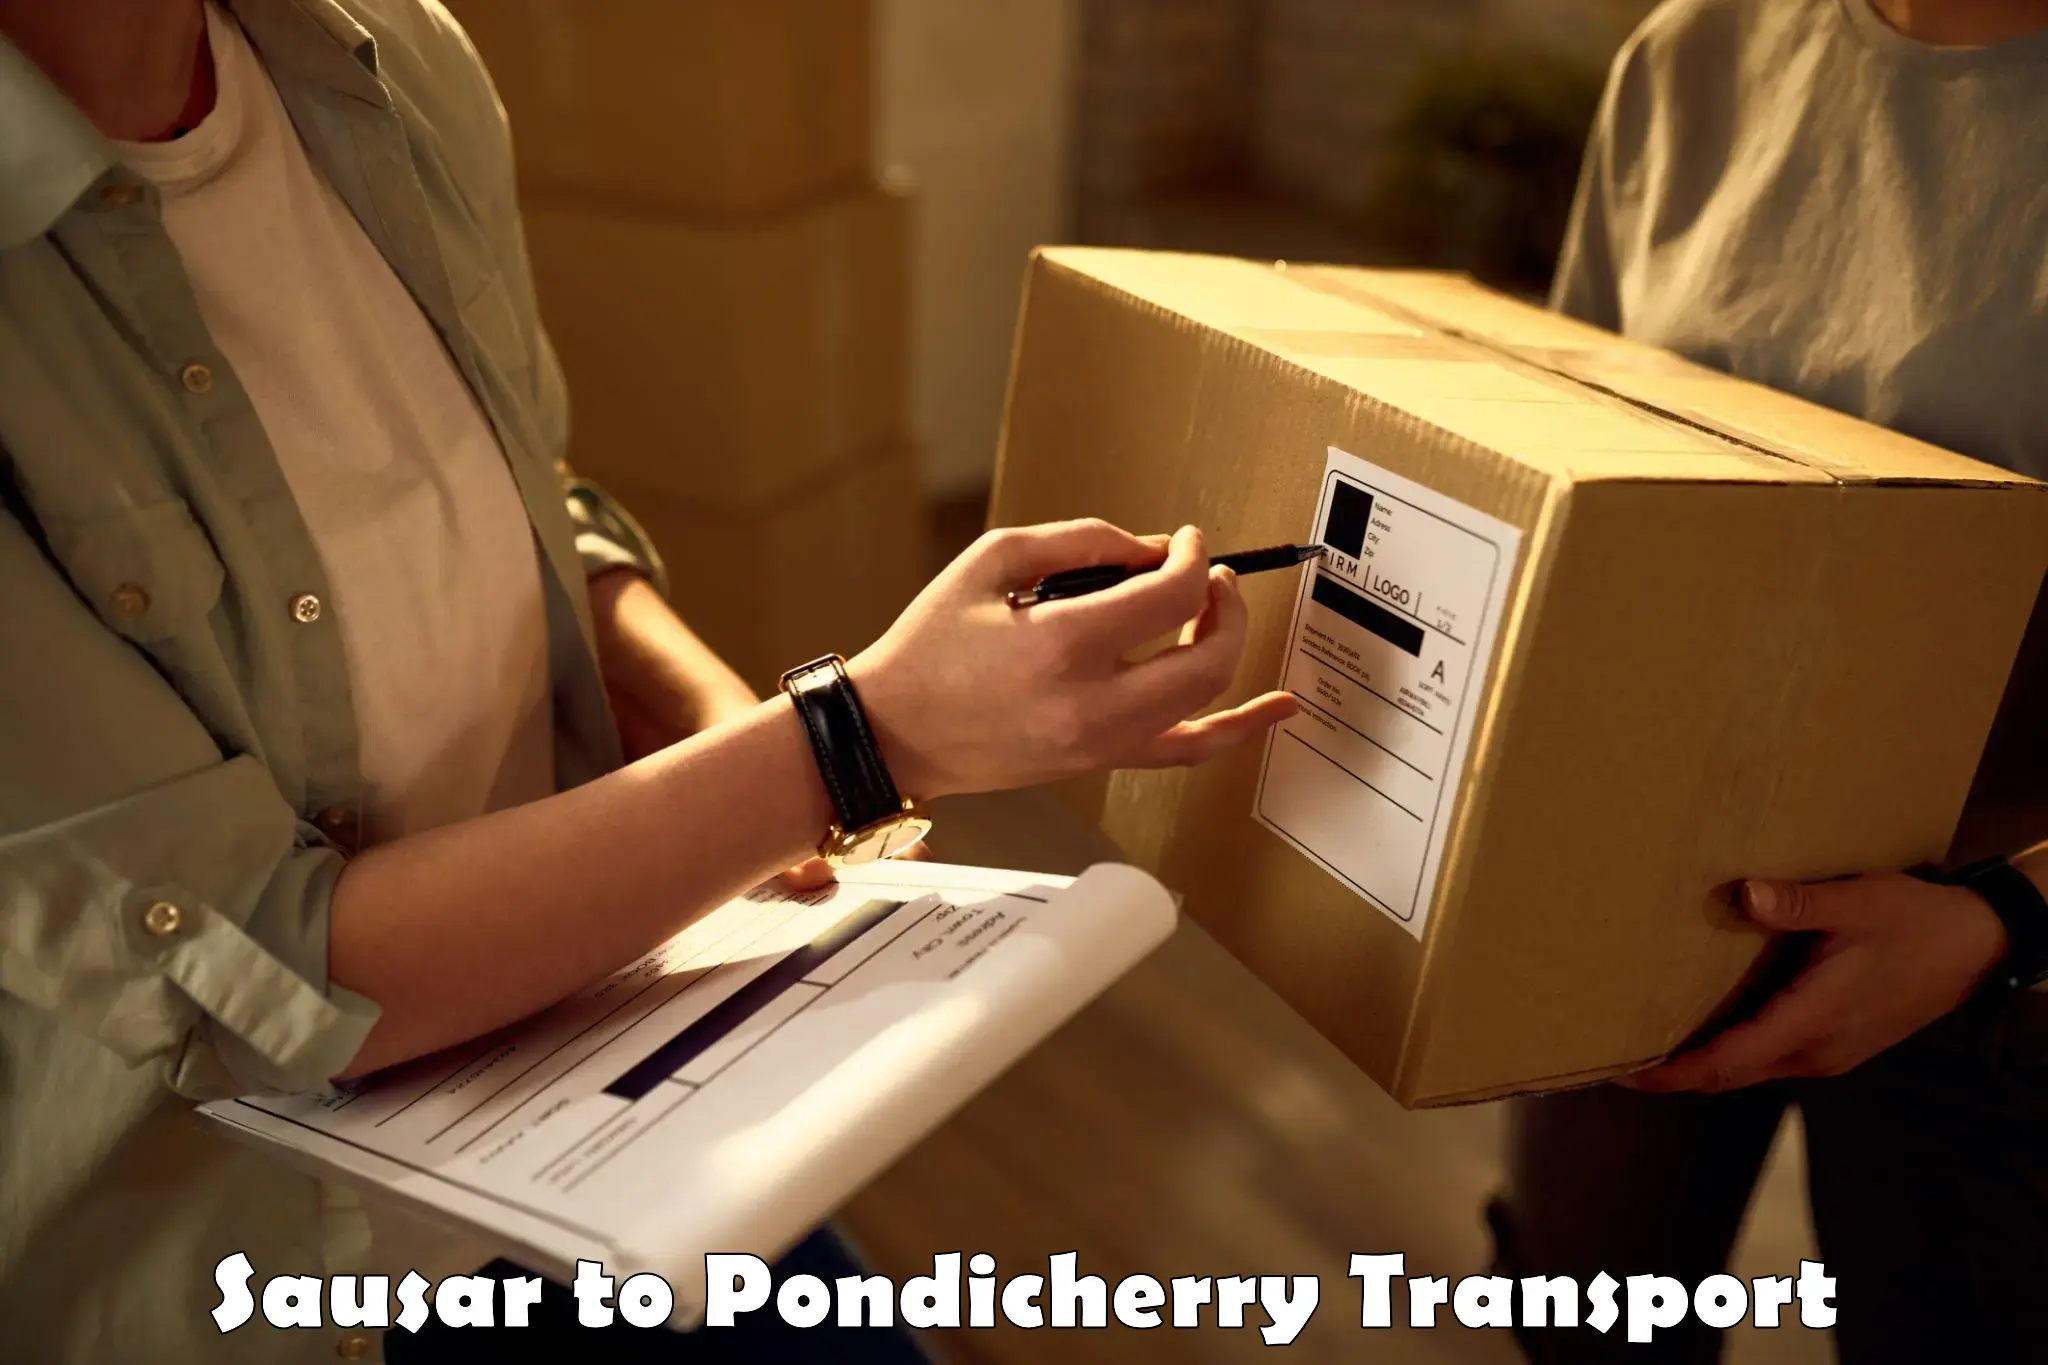 Transport services Sausar to Pondicherry